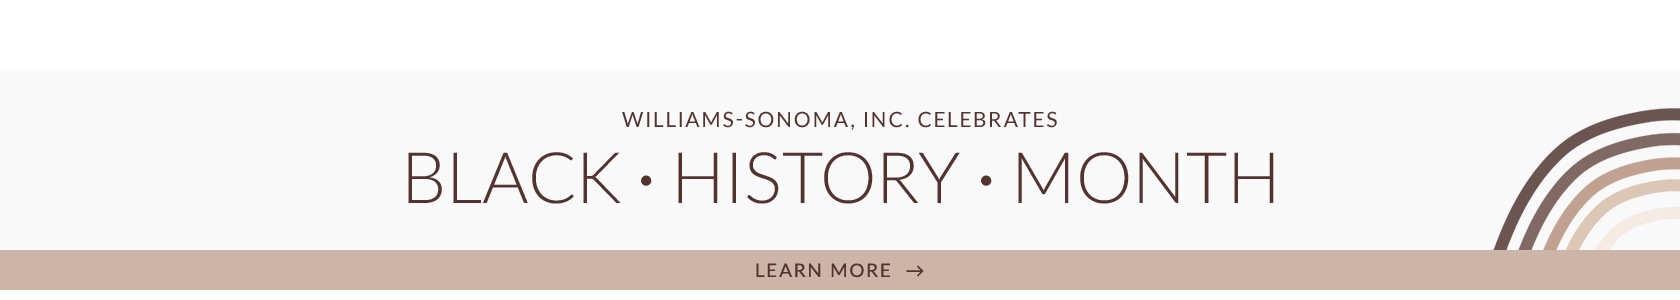 Wiliiams Sonoma Inc. Celebrates Black History Month